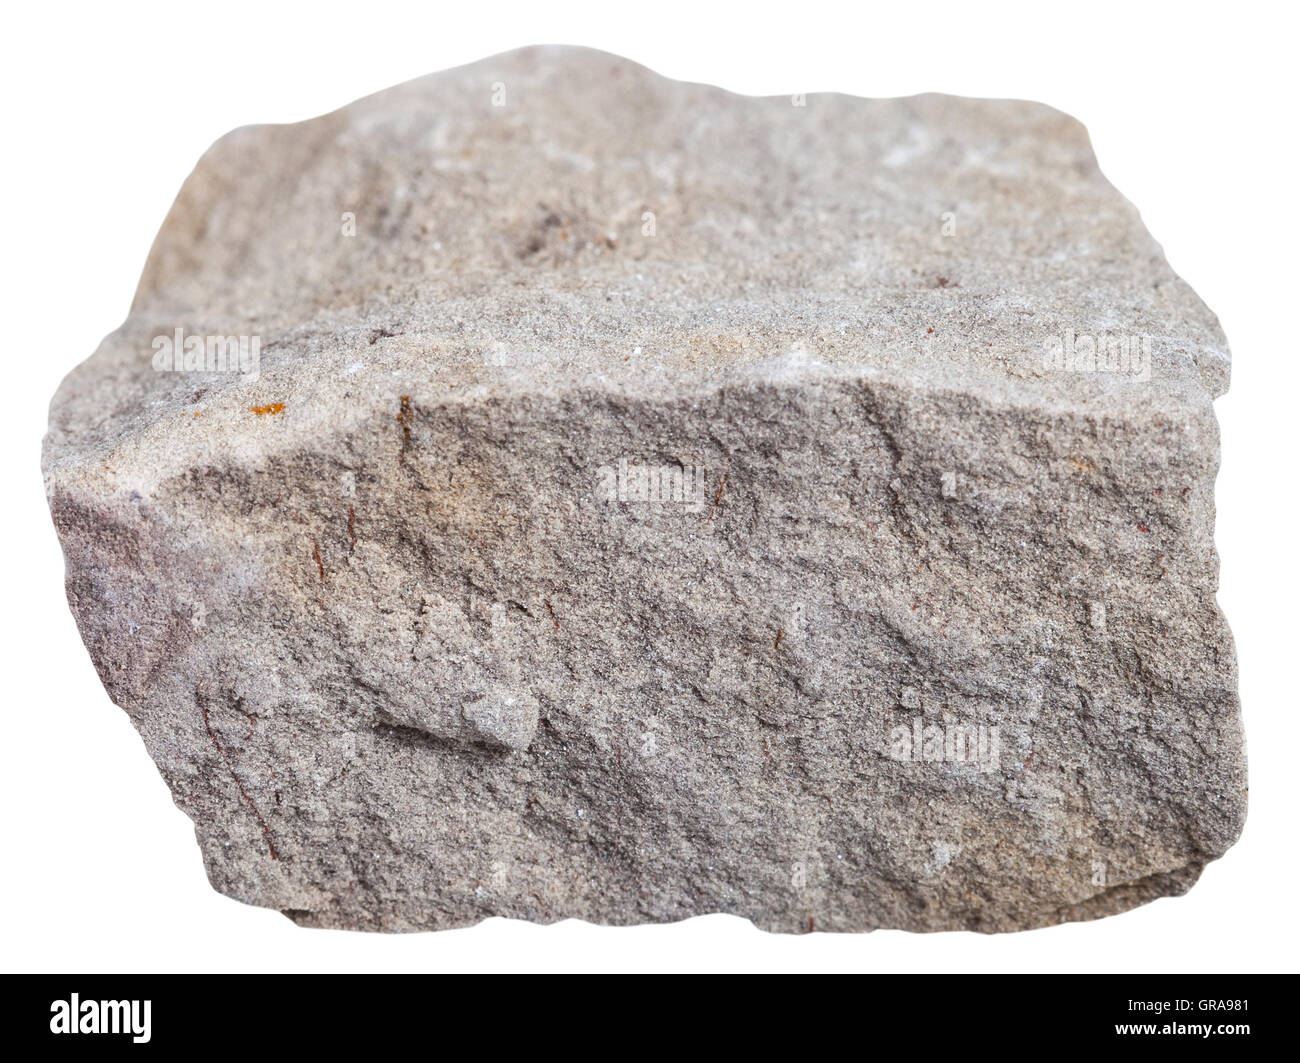 macro shooting of sedimentary rock specimens - Dolomite (dolostone) mineral isolated on white background Stock Photo